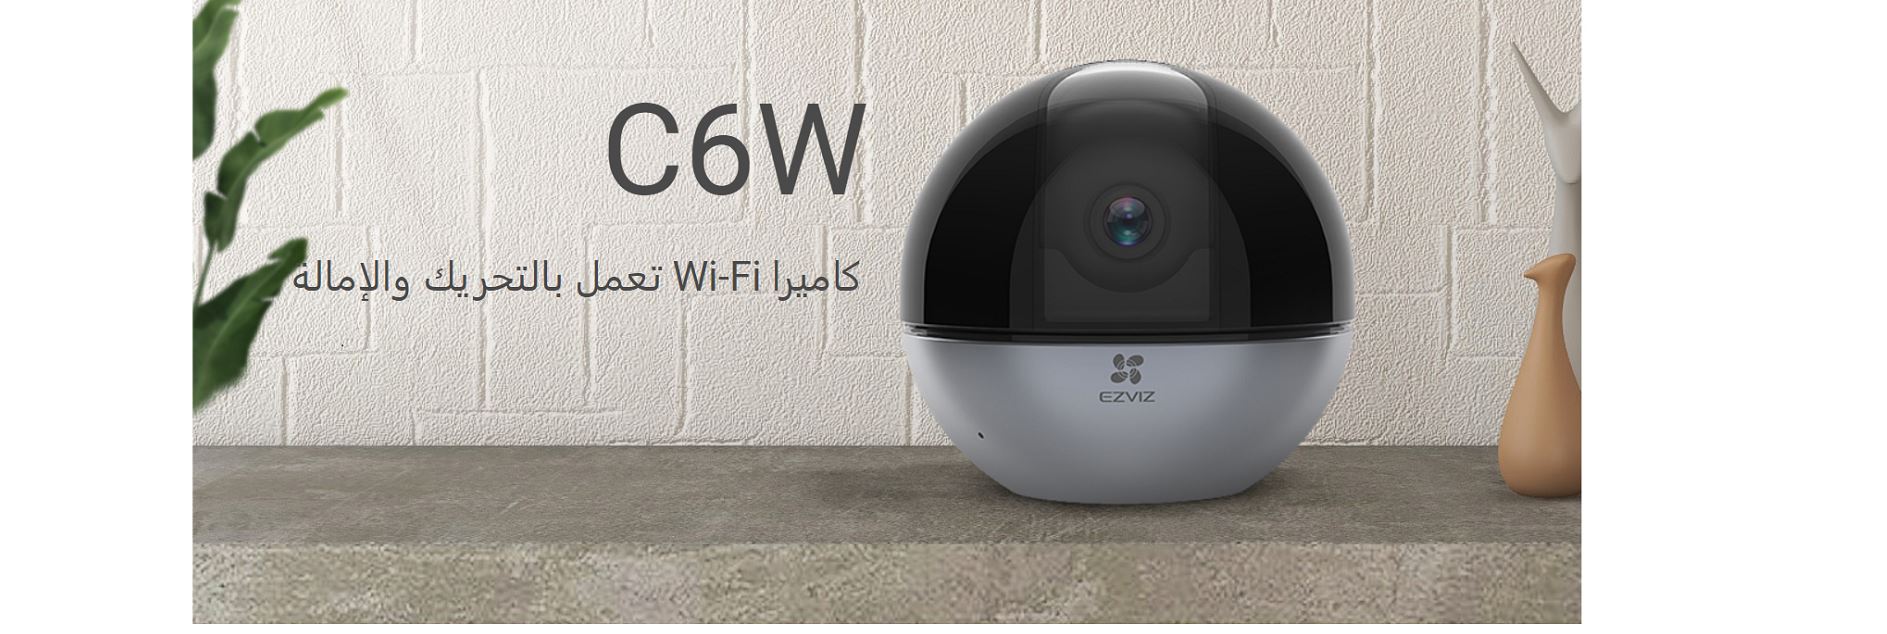 EzViz C6W Smart Wi-Fi Pan & Tilt Security Camera